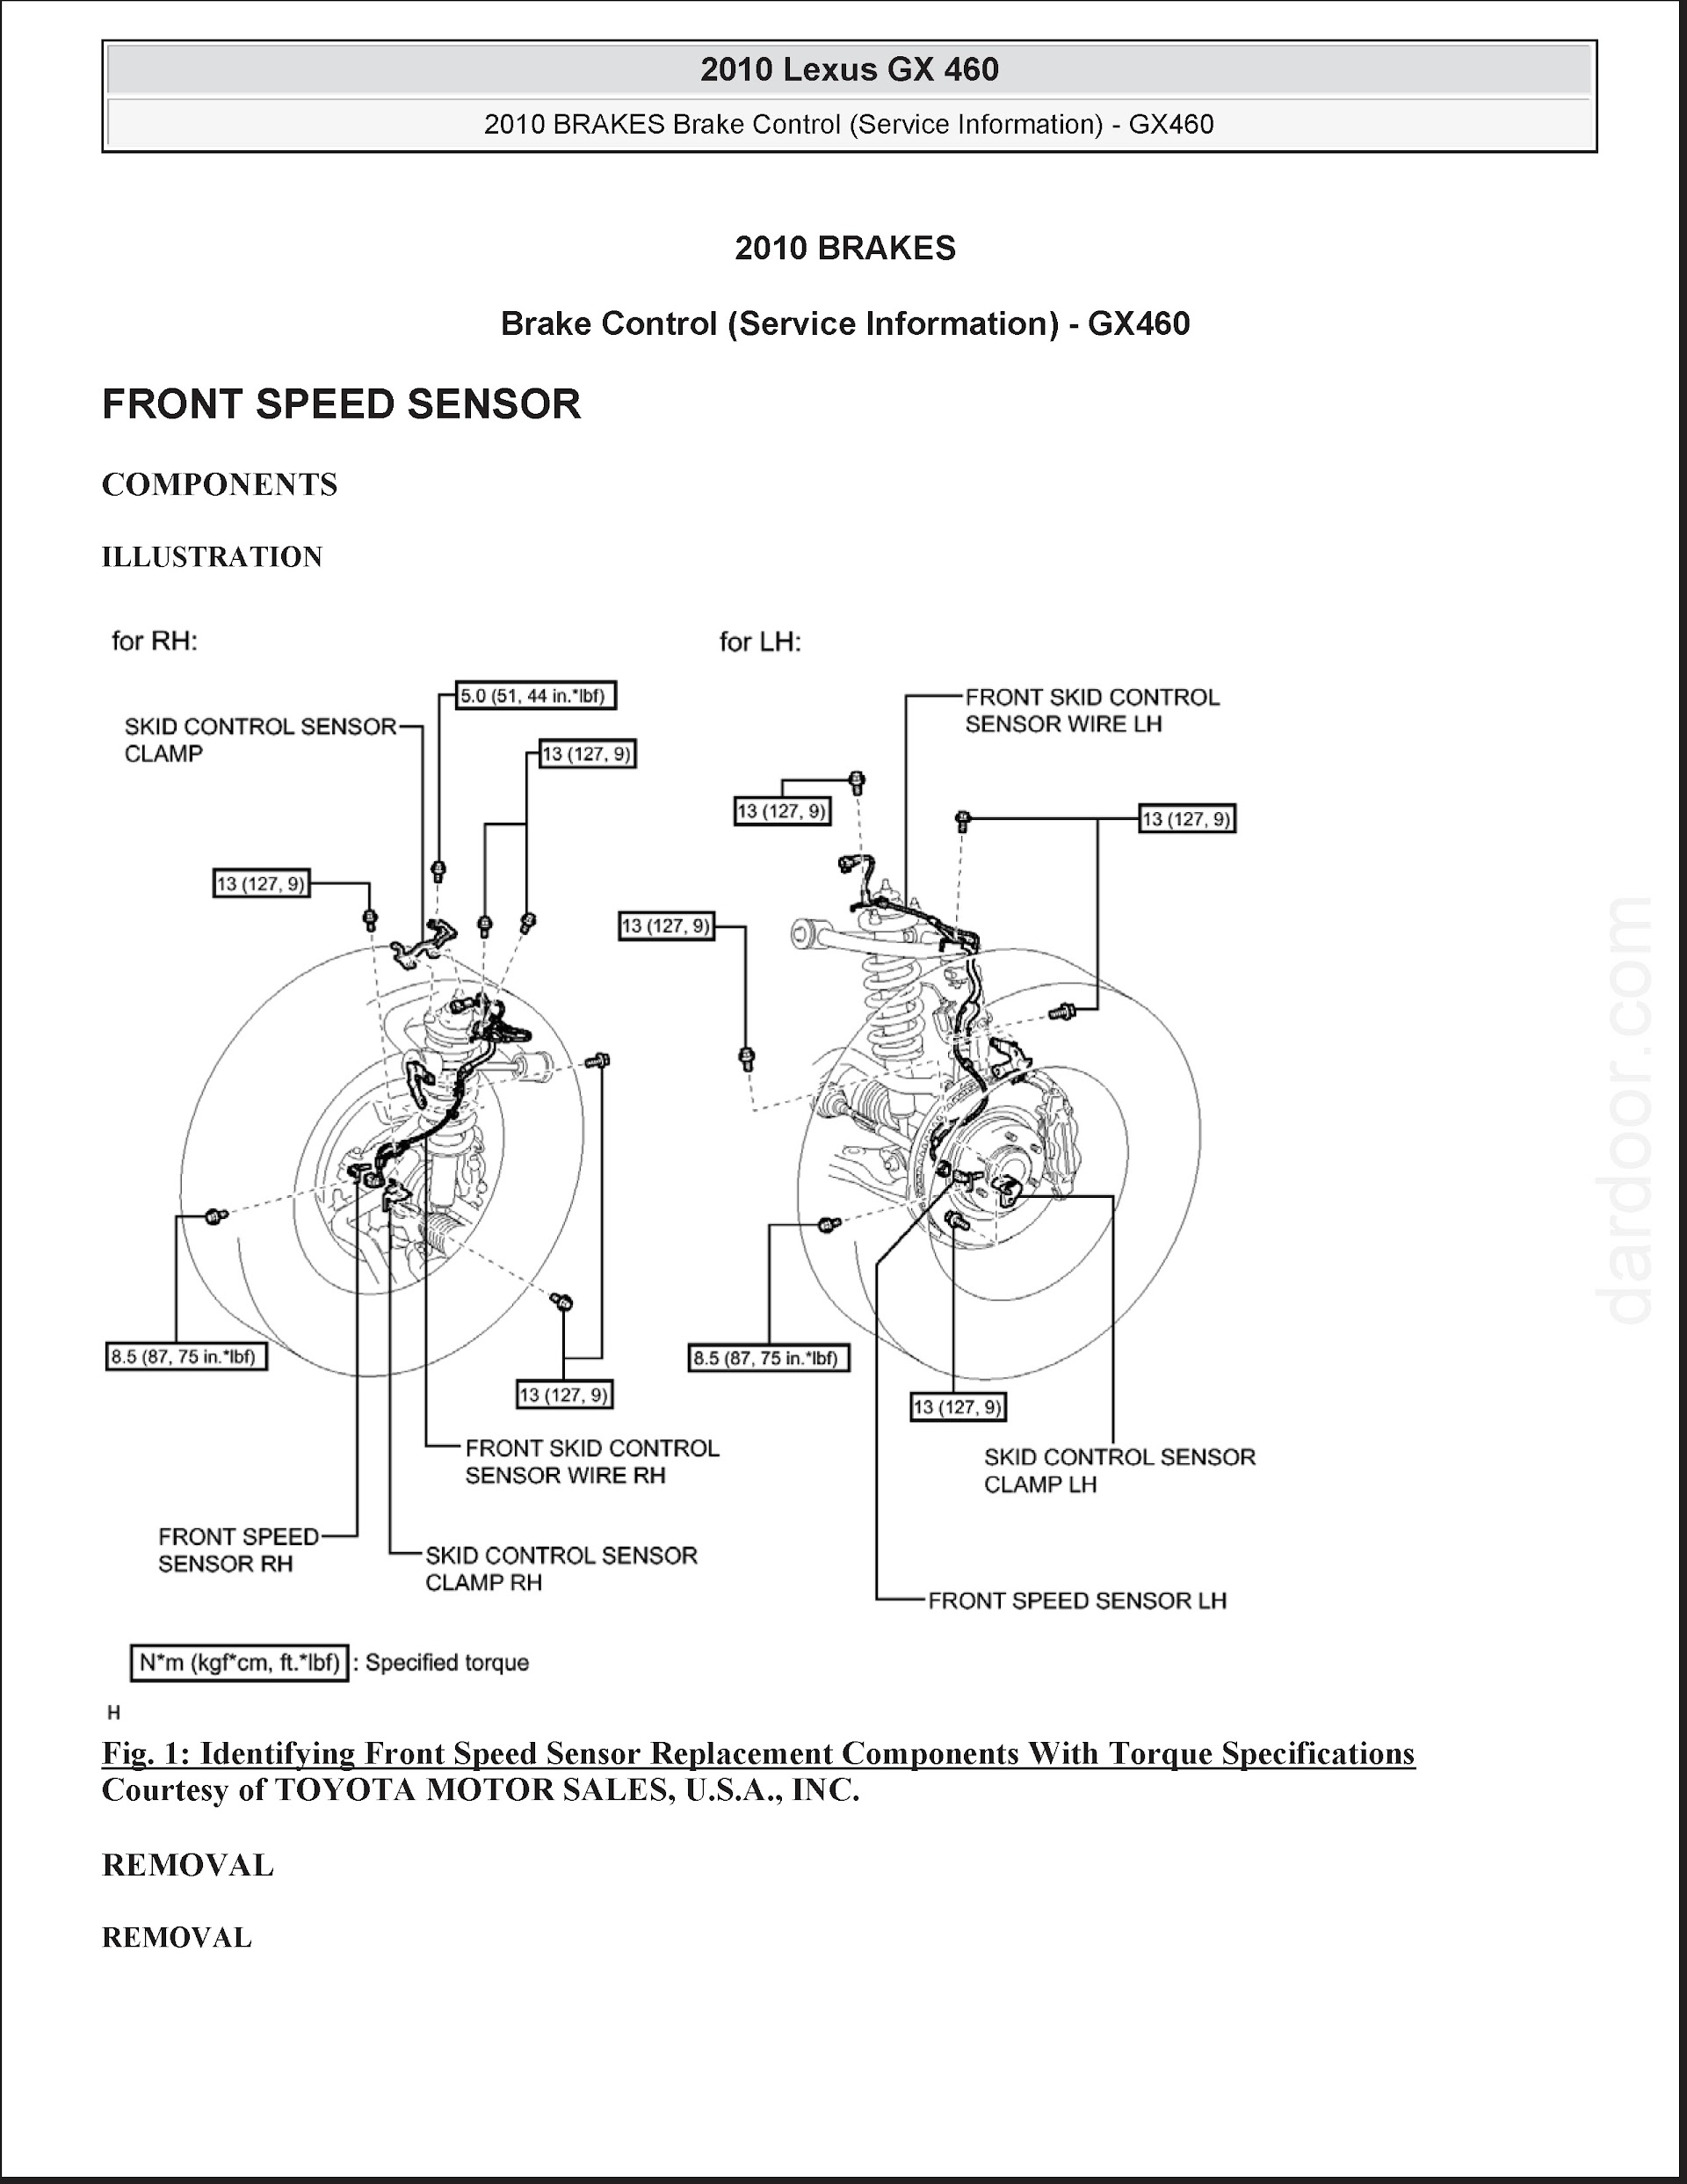 2010-2013 Lexus GX 460 Brake Control Service Information